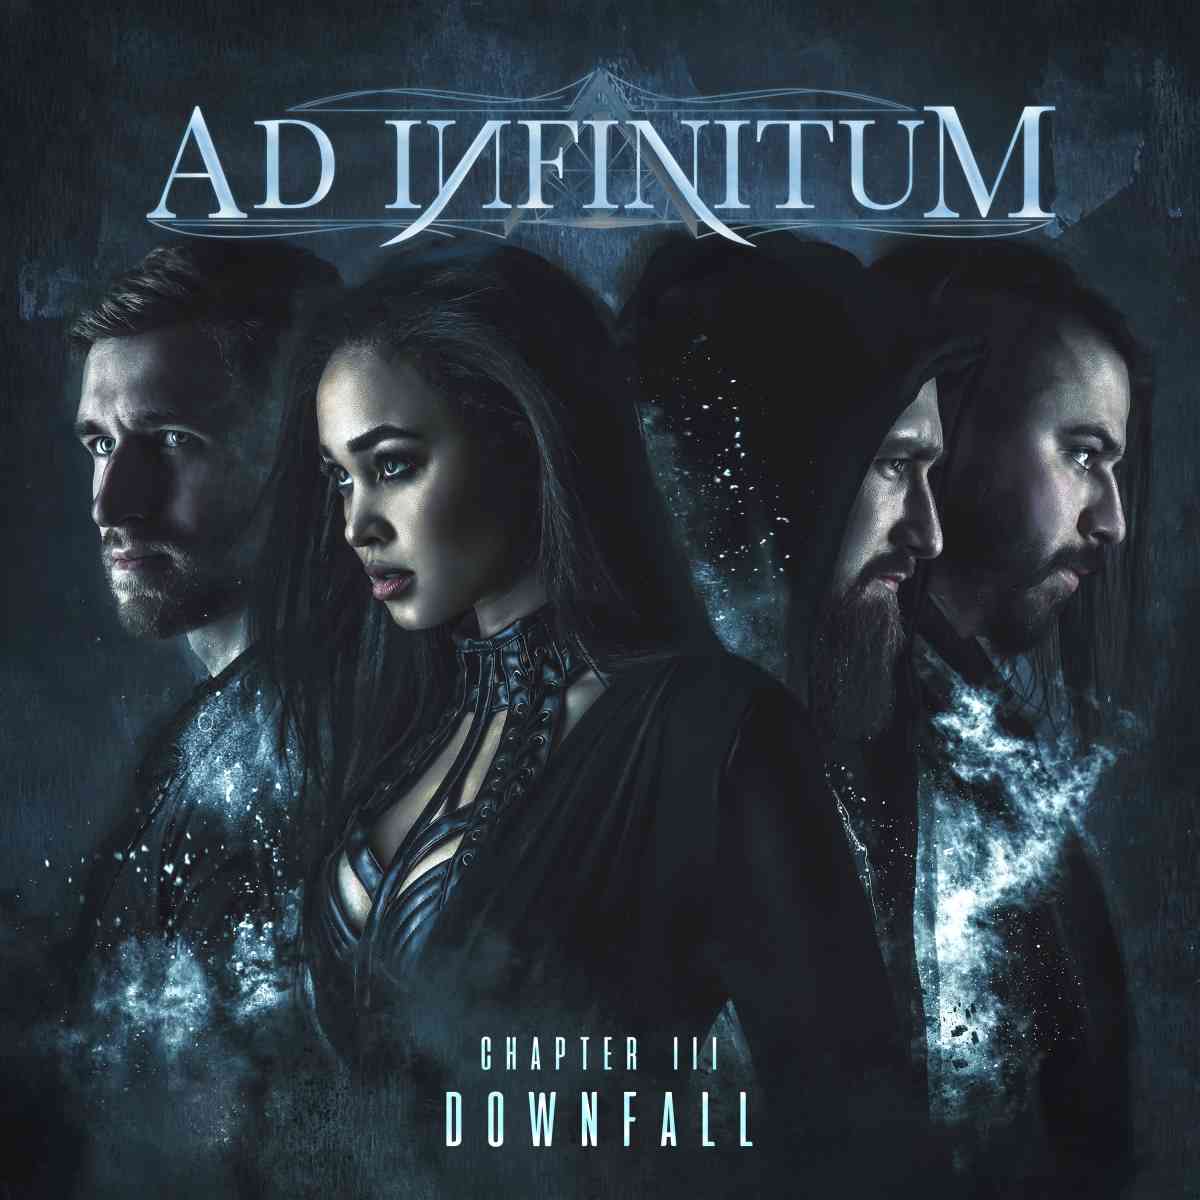 ad infinitum - chapter III - downfall - album cover